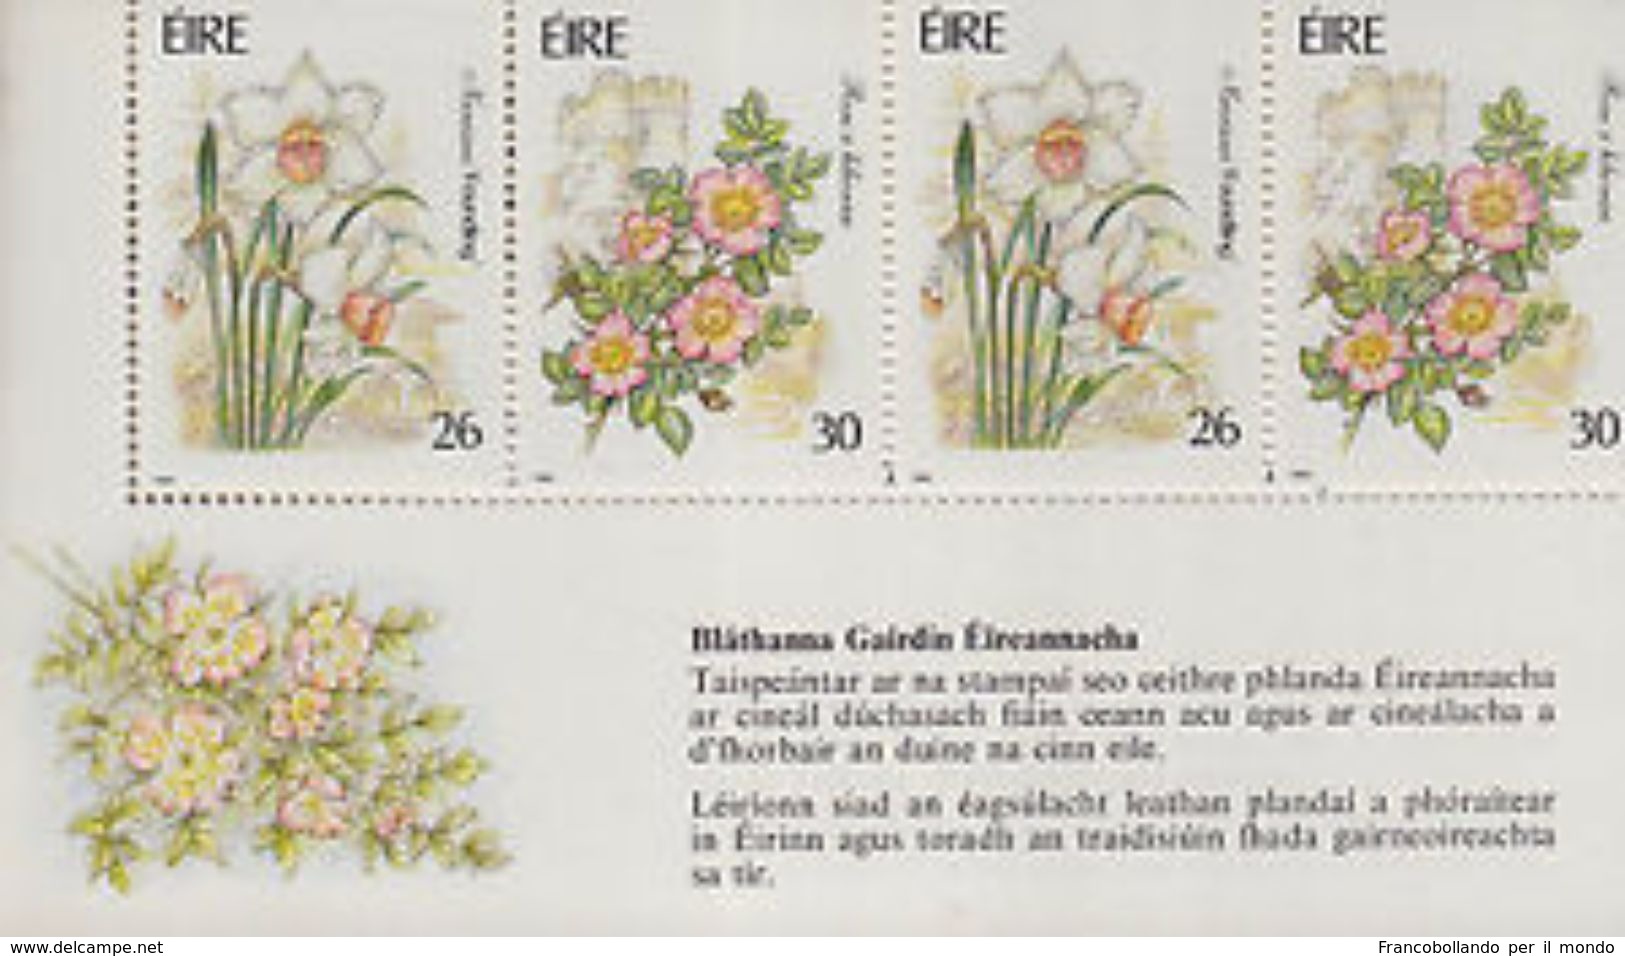 IRELAND 1990 IRISH GARDEN FLOWERS COMMEMORATIVE STAMP BOOKLET - SG SB36 - Libretti